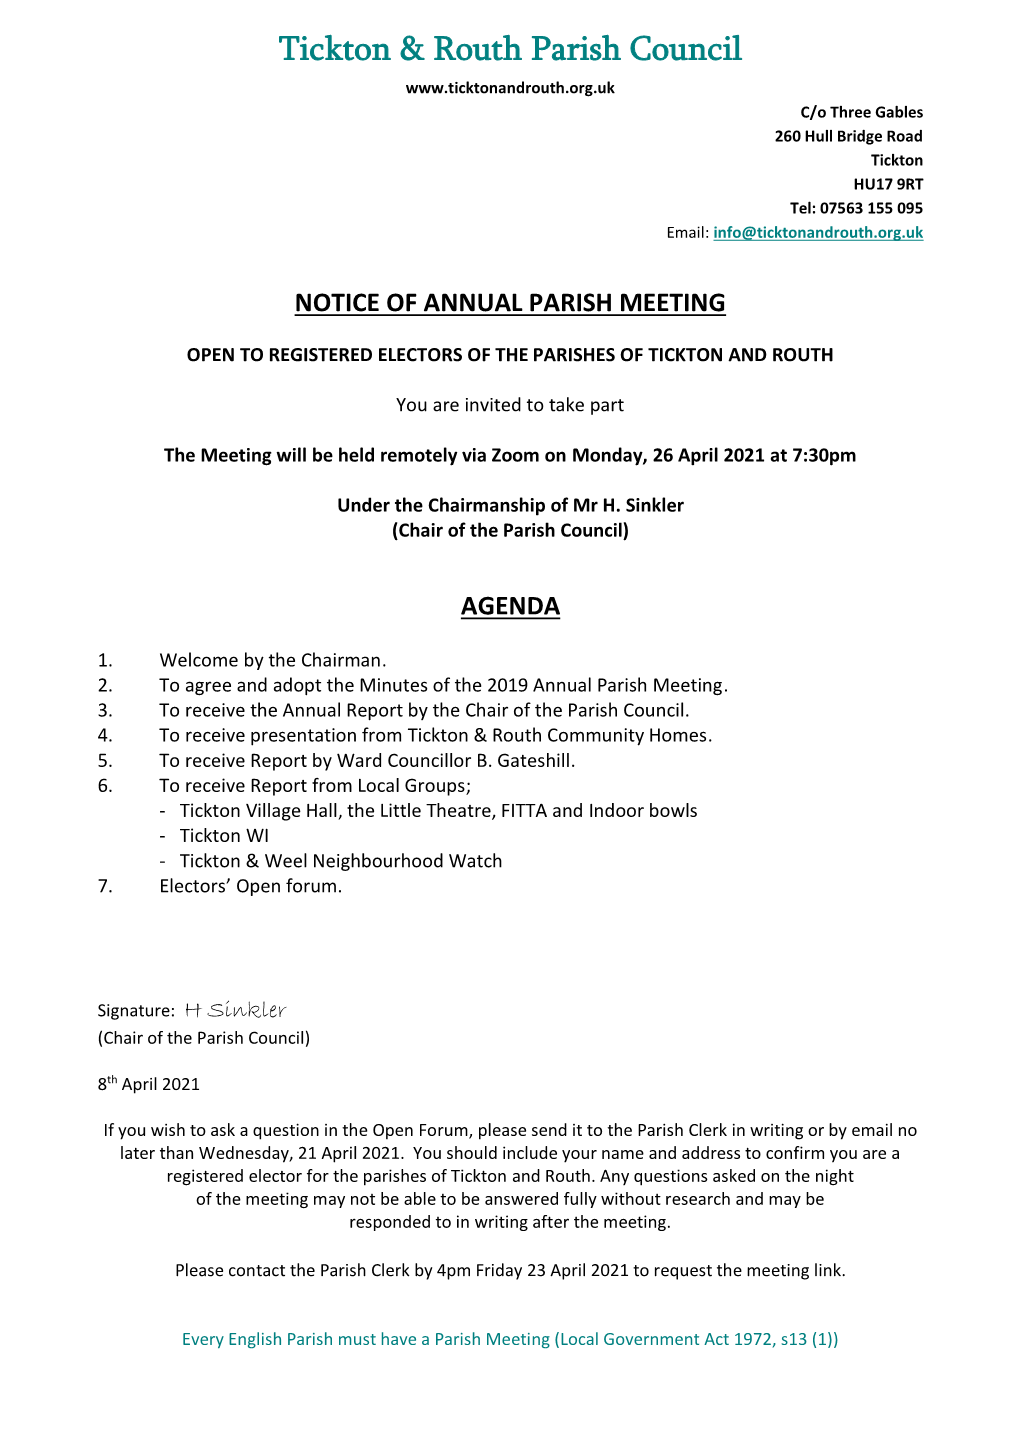 Annual Parish Meeting to Be Held at 7:30Pm Monday, 26 April 2021